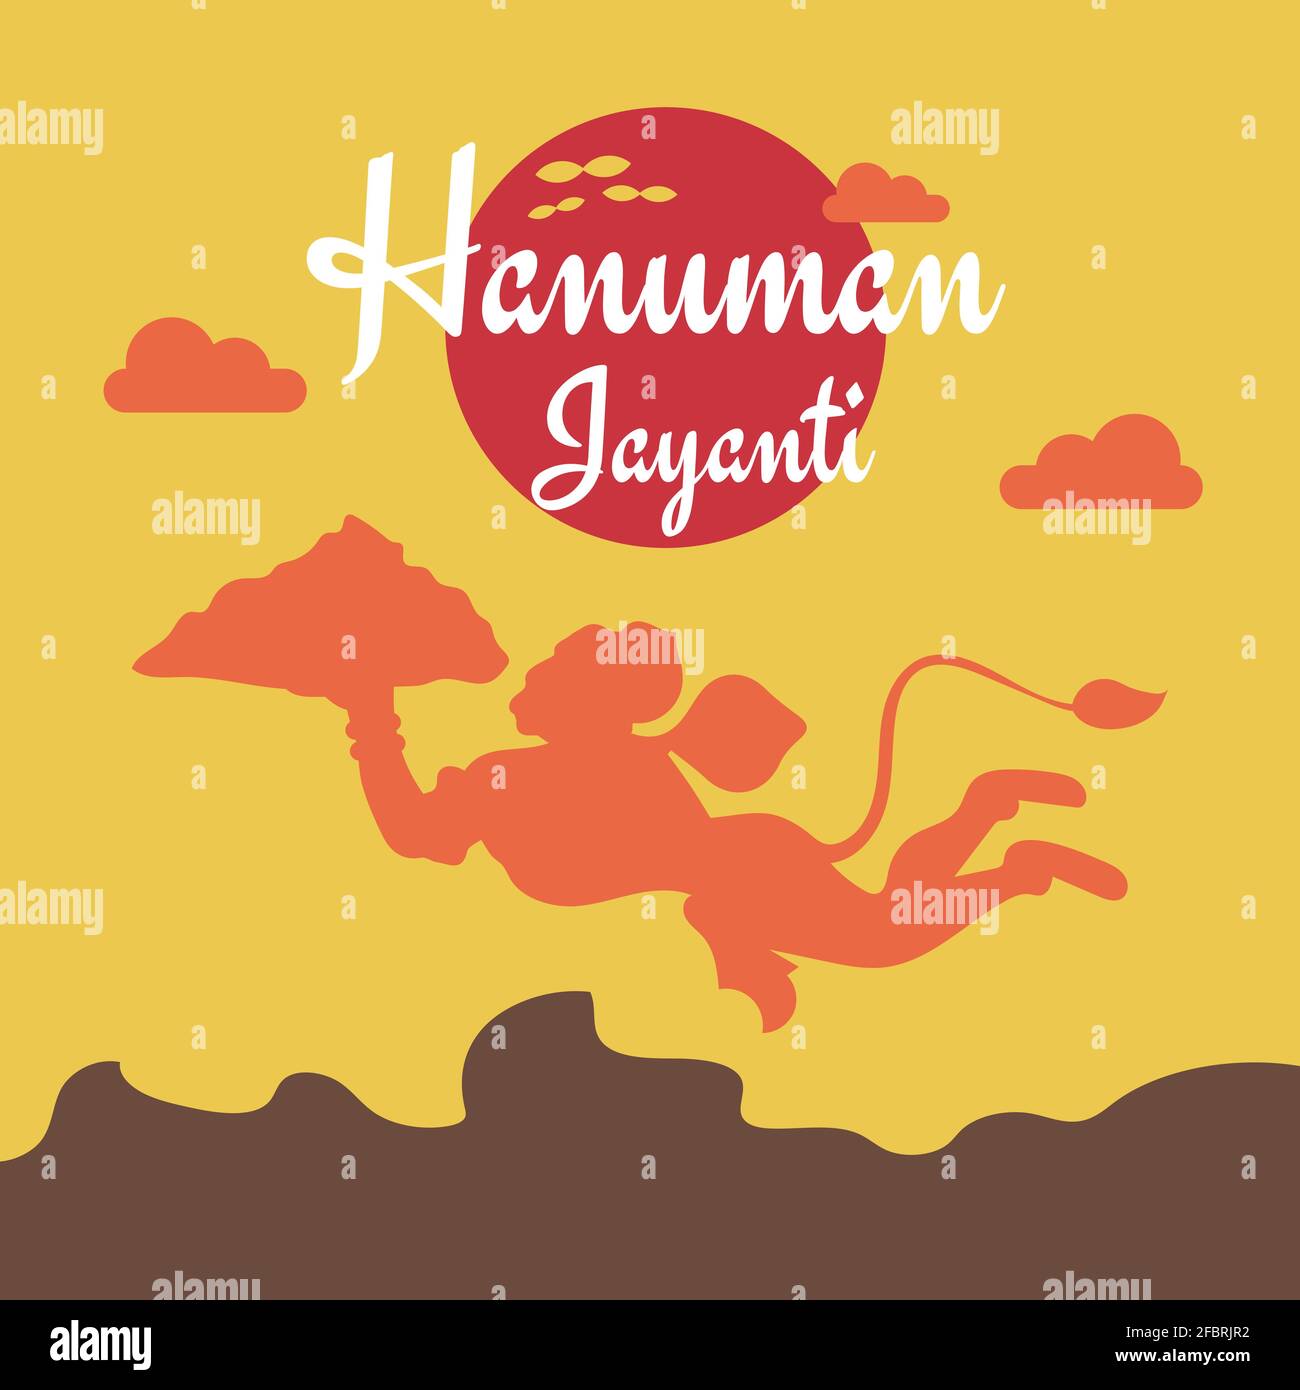 Hanuman Jayanti poster vector, flying hanuman silhouette illustration design Stock Vector